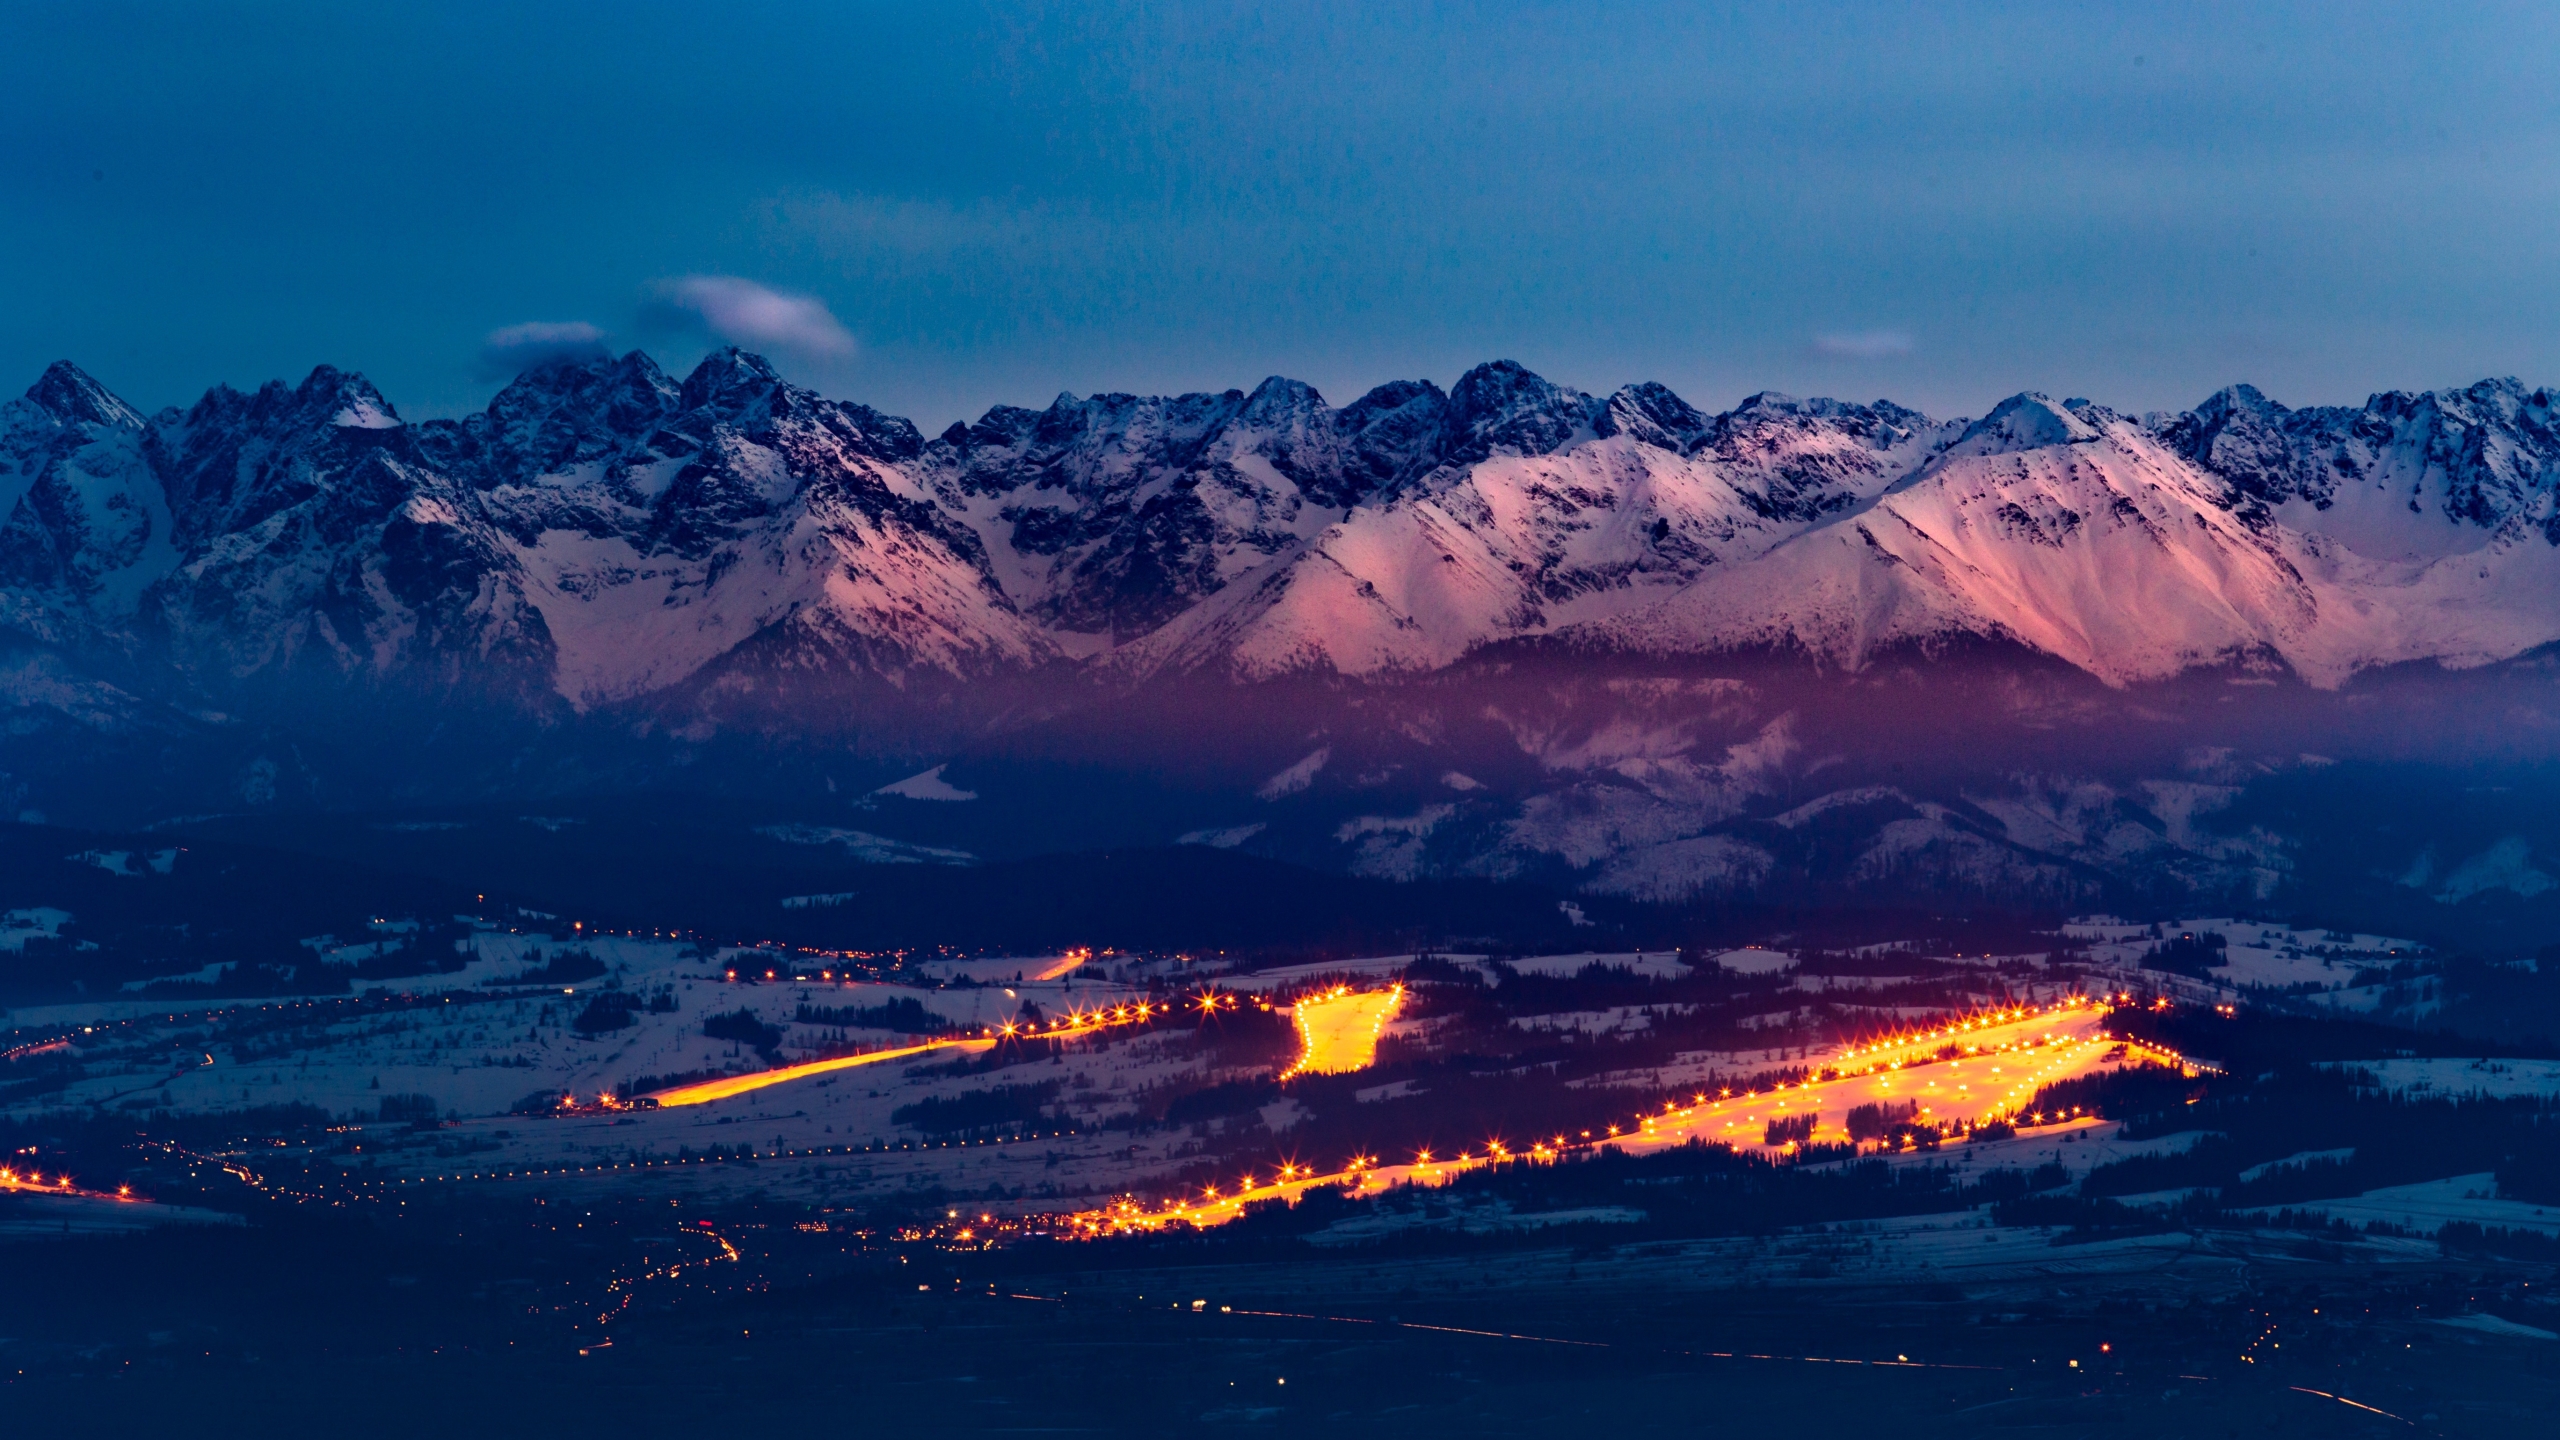 2560x1440 Tatra Mountains Ski Resort 1440p Resolution Wallpaper Hd